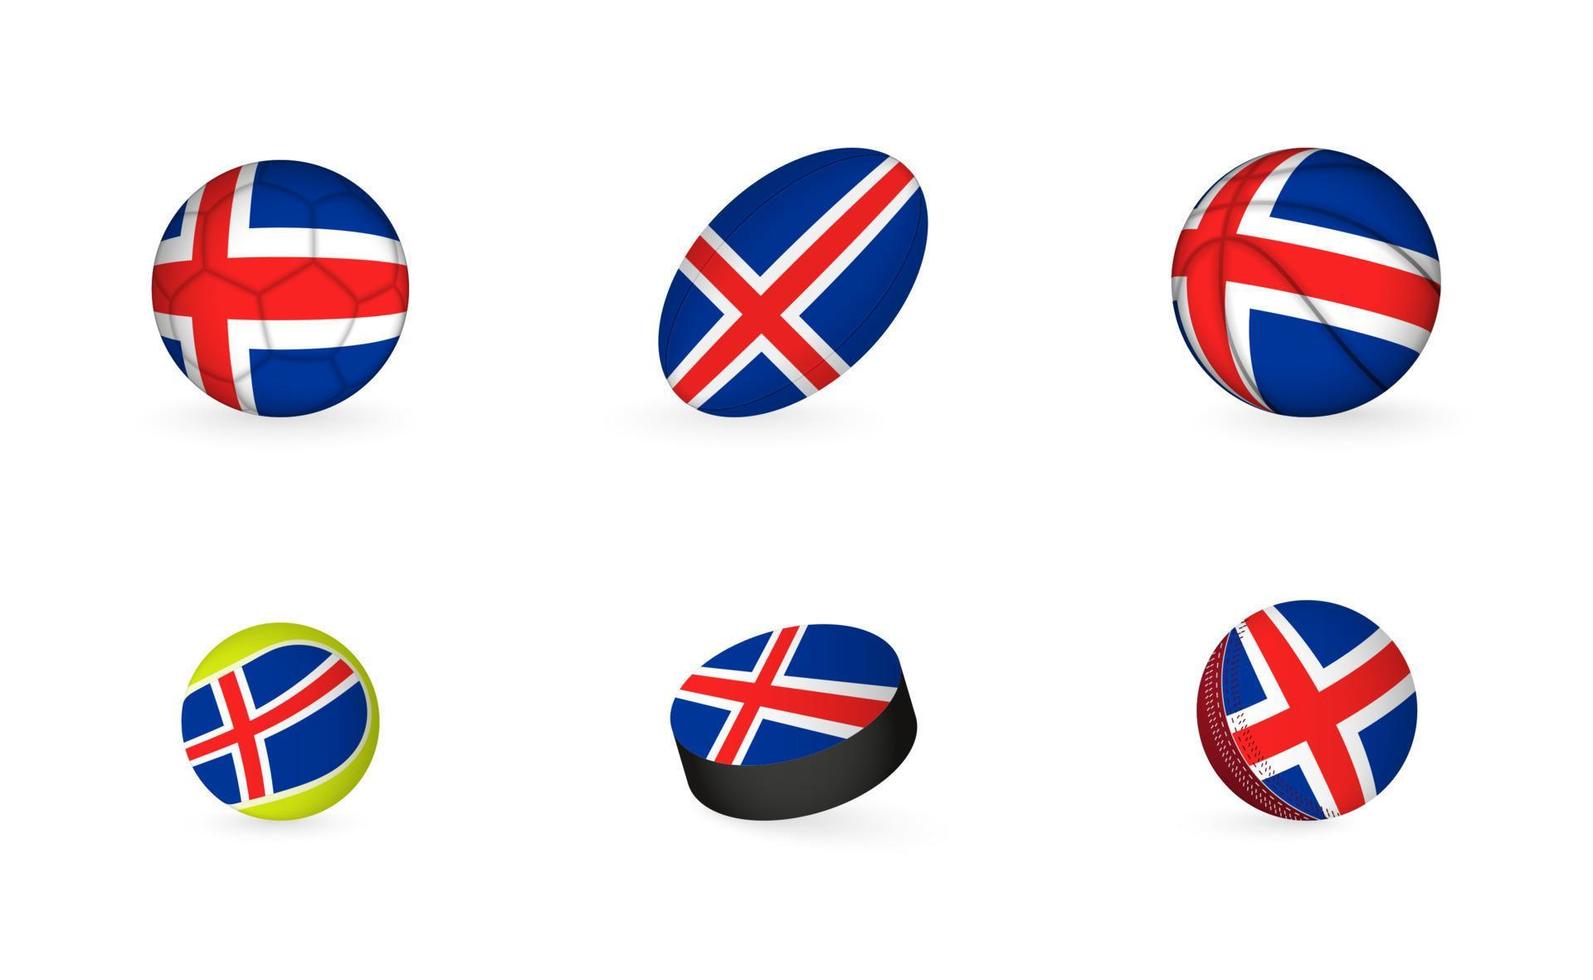 équipement de sport avec le drapeau de l'islande. jeu d'icônes de sport. vecteur